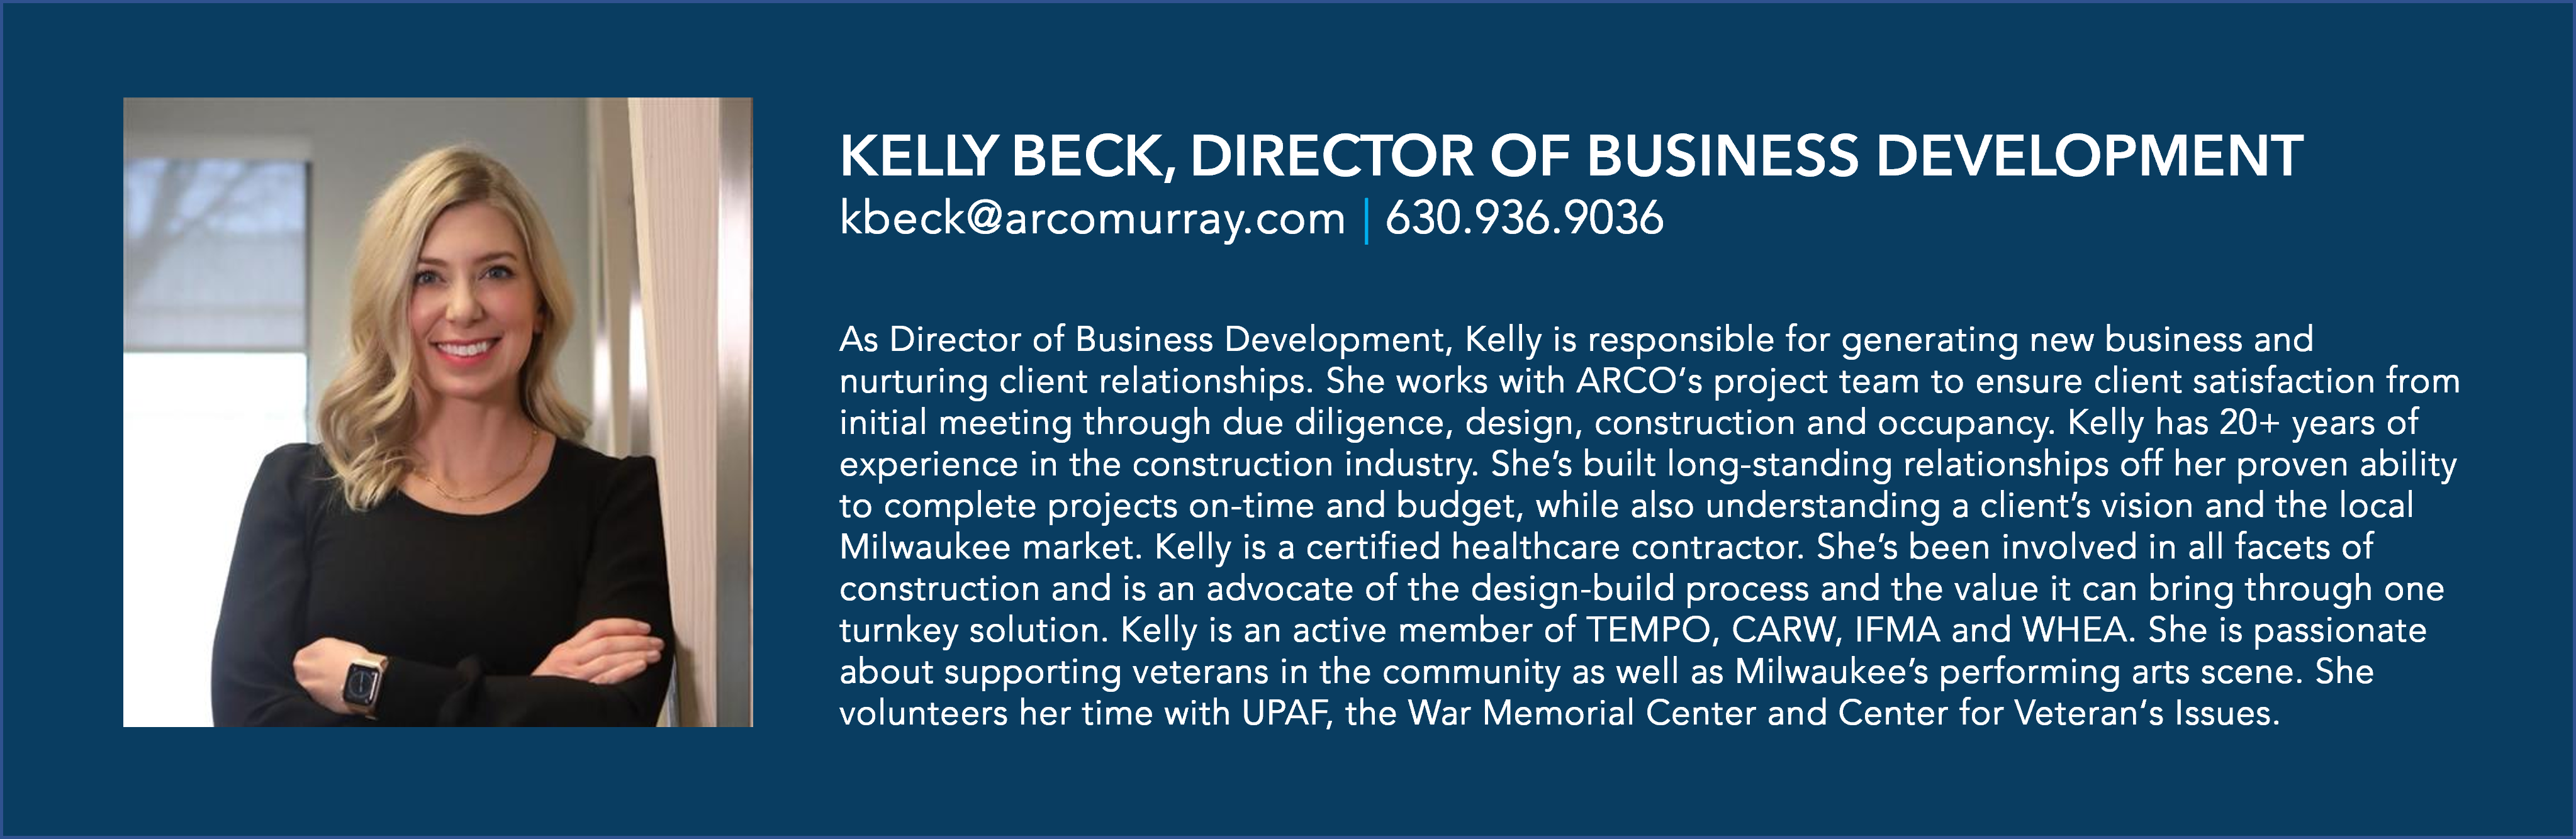 Kelly Beck Bio